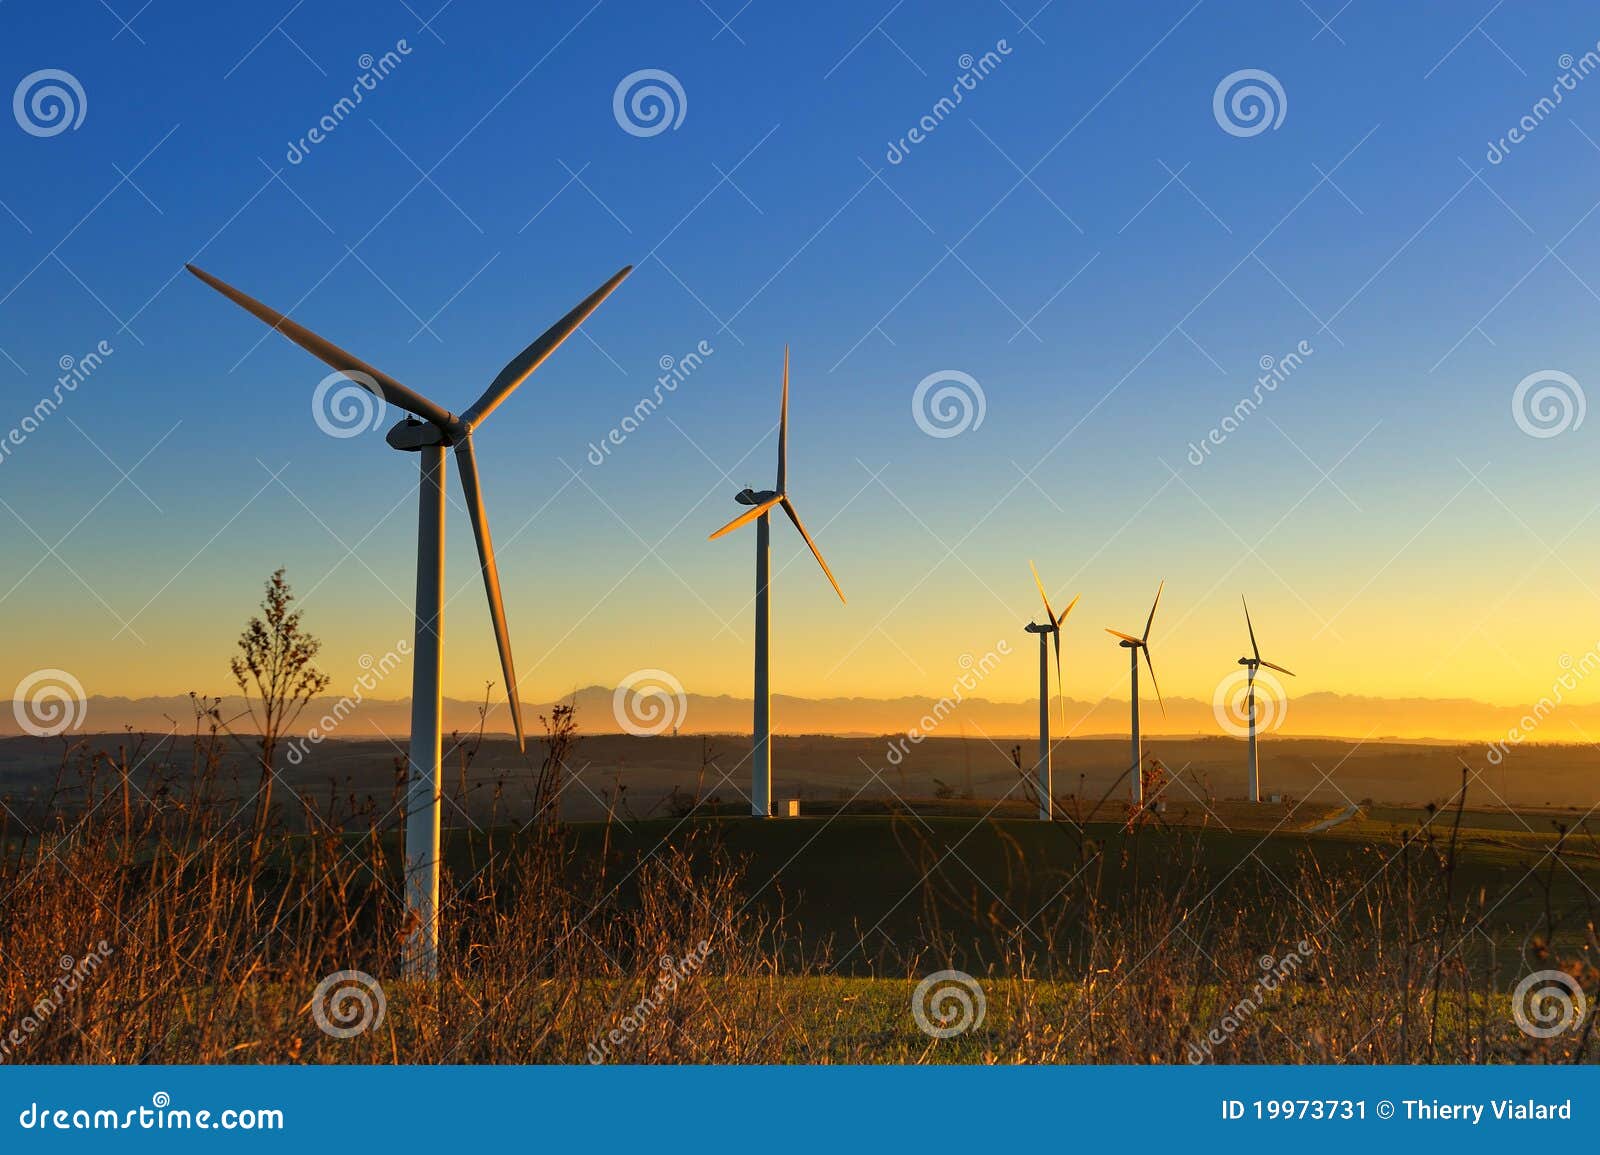 wind turbines-two